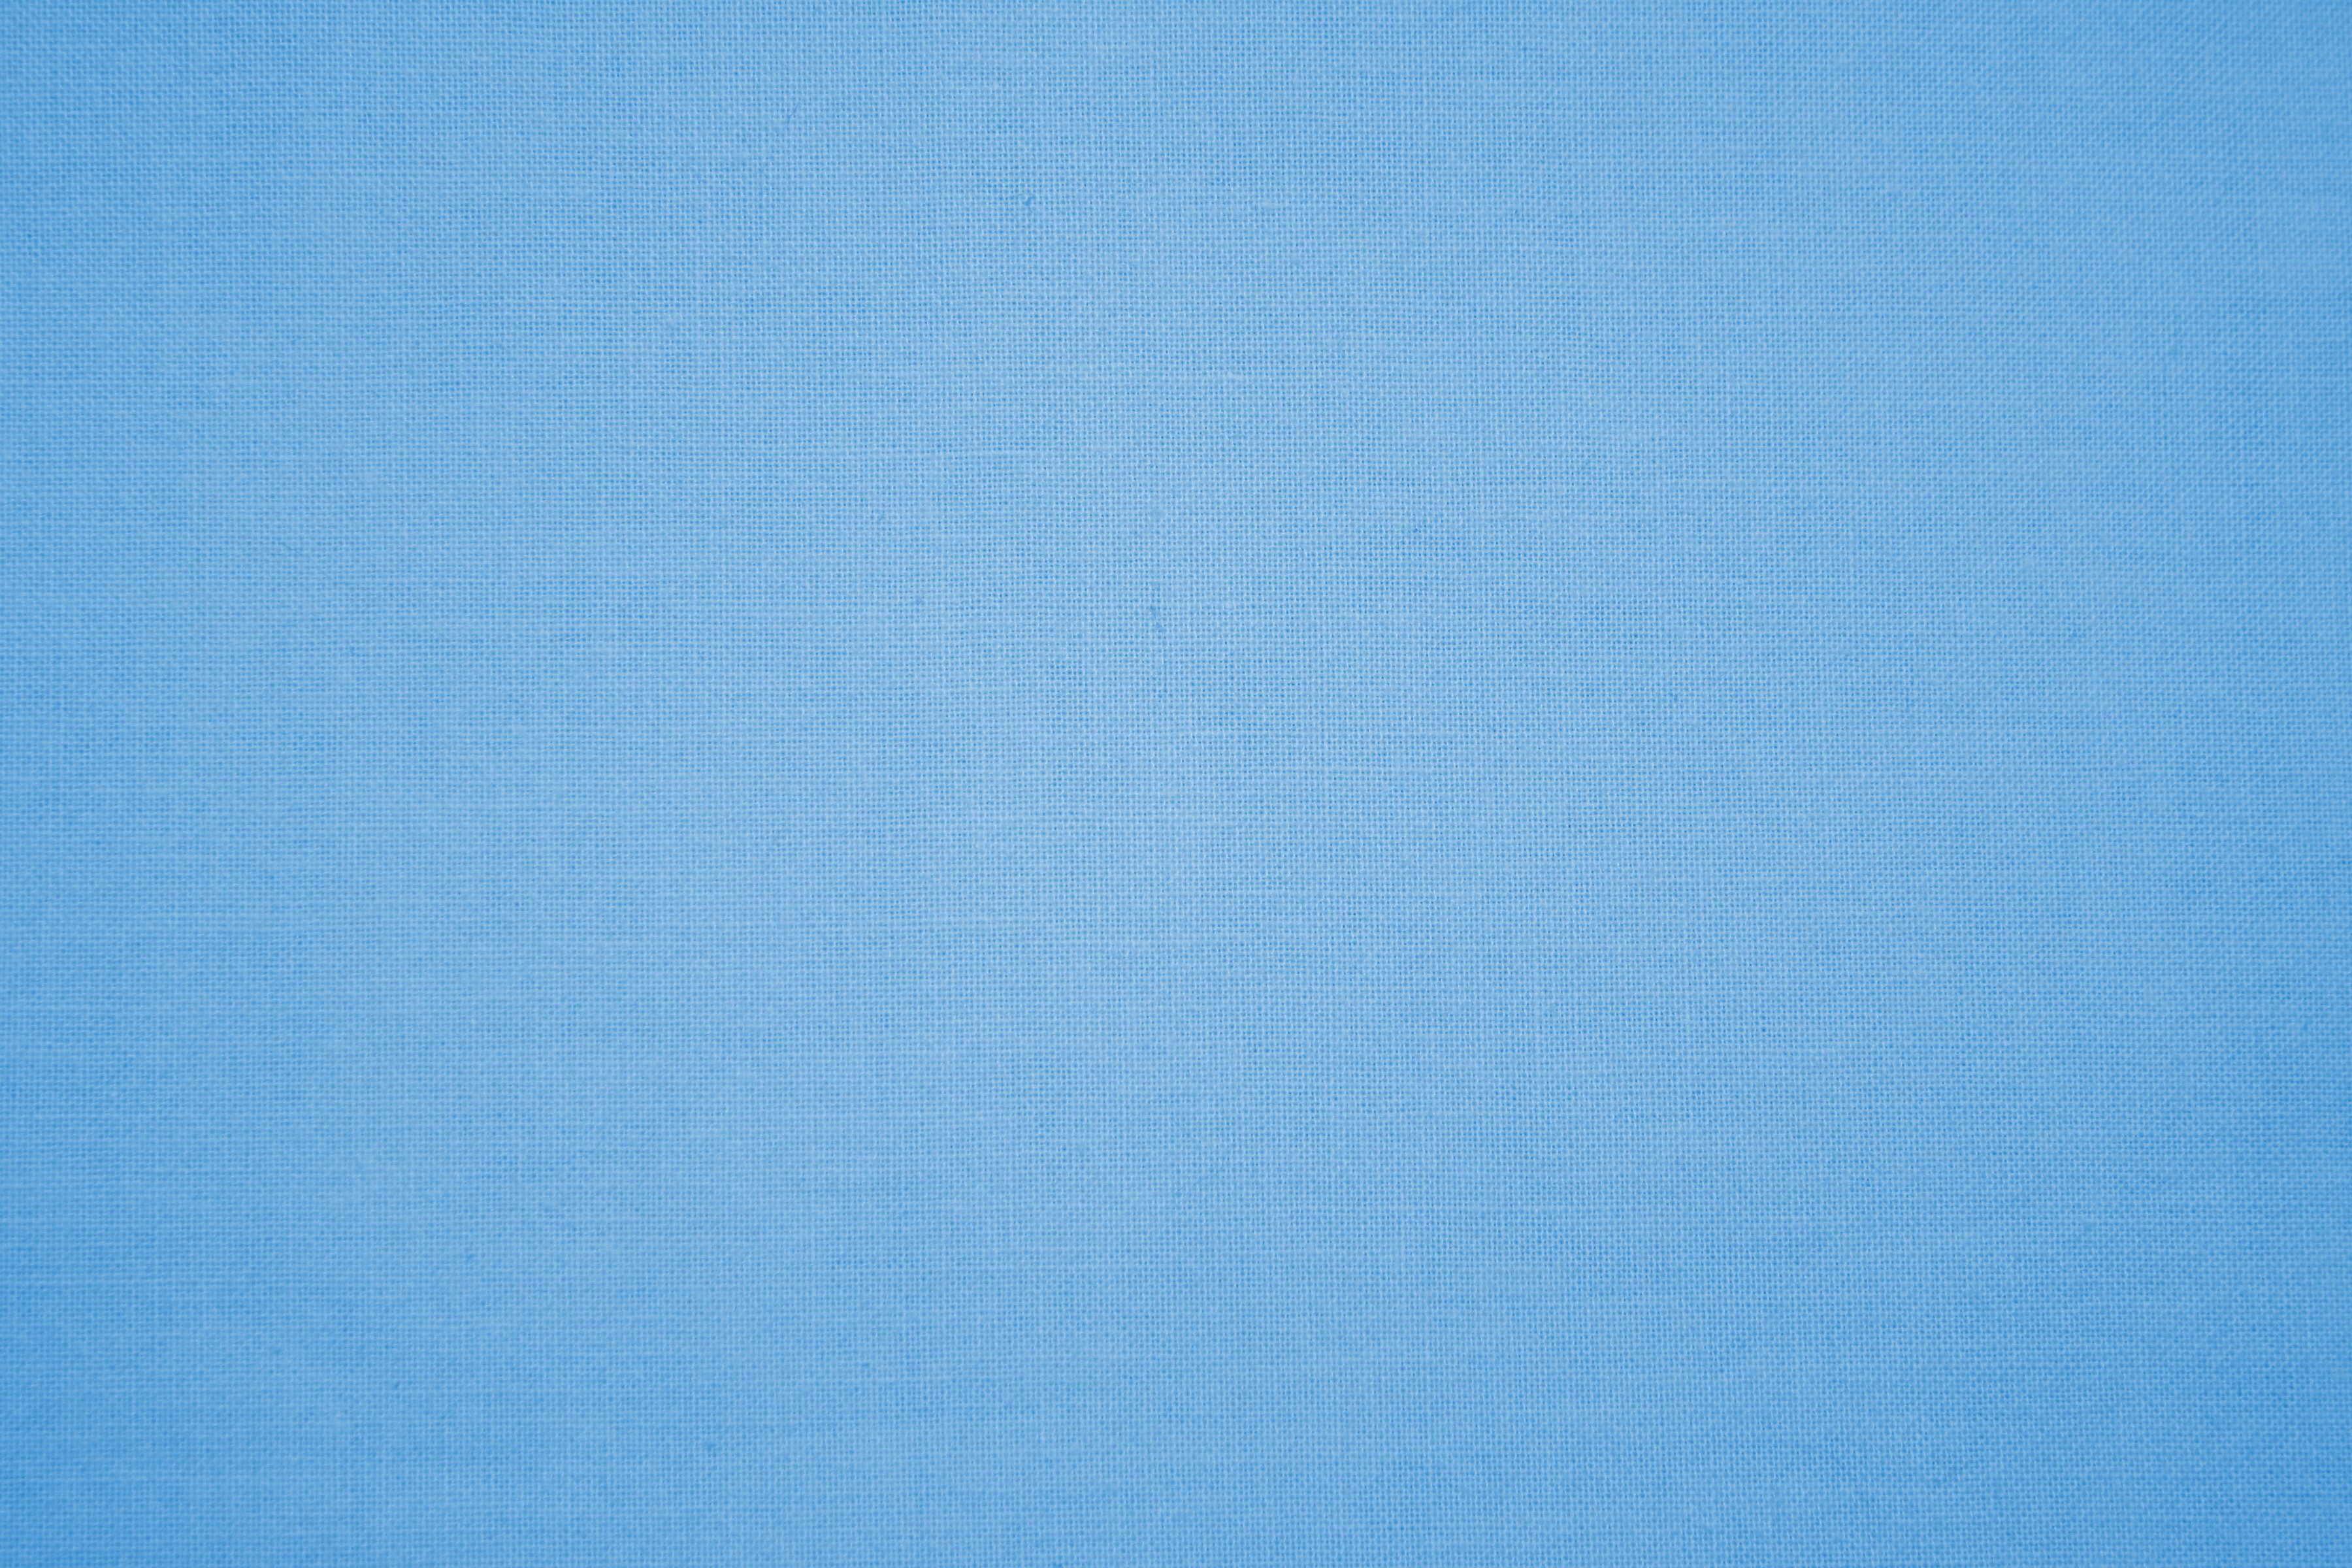 light-blue-canvas-fabric-texture.jpg